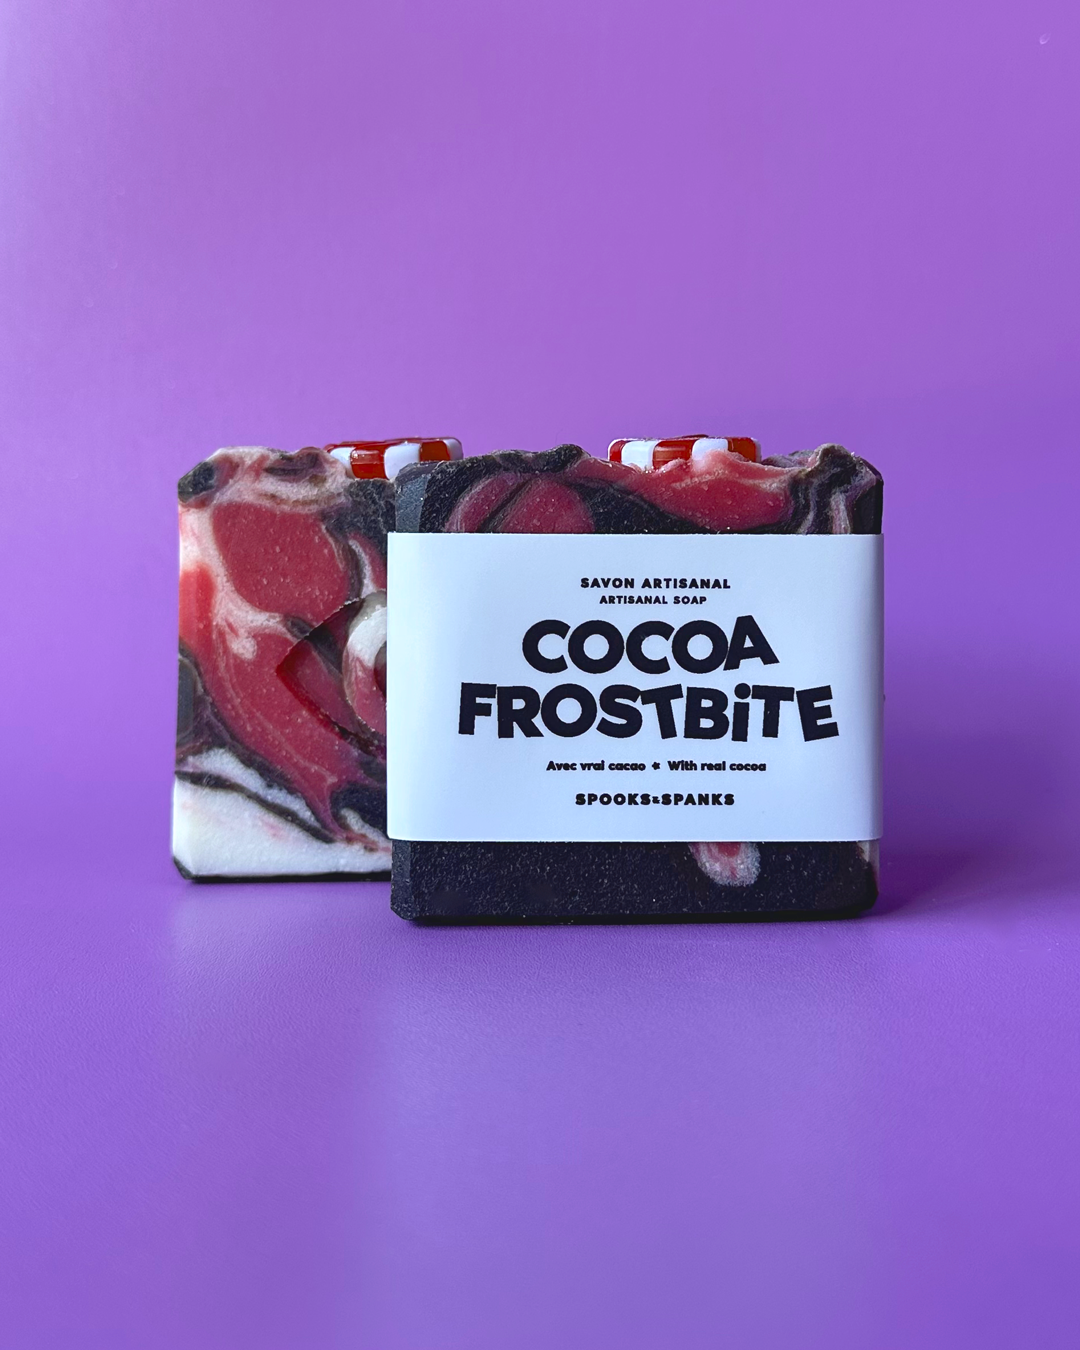 Cocoa Frostbite Soap Bar - Mint + Real Cocoa